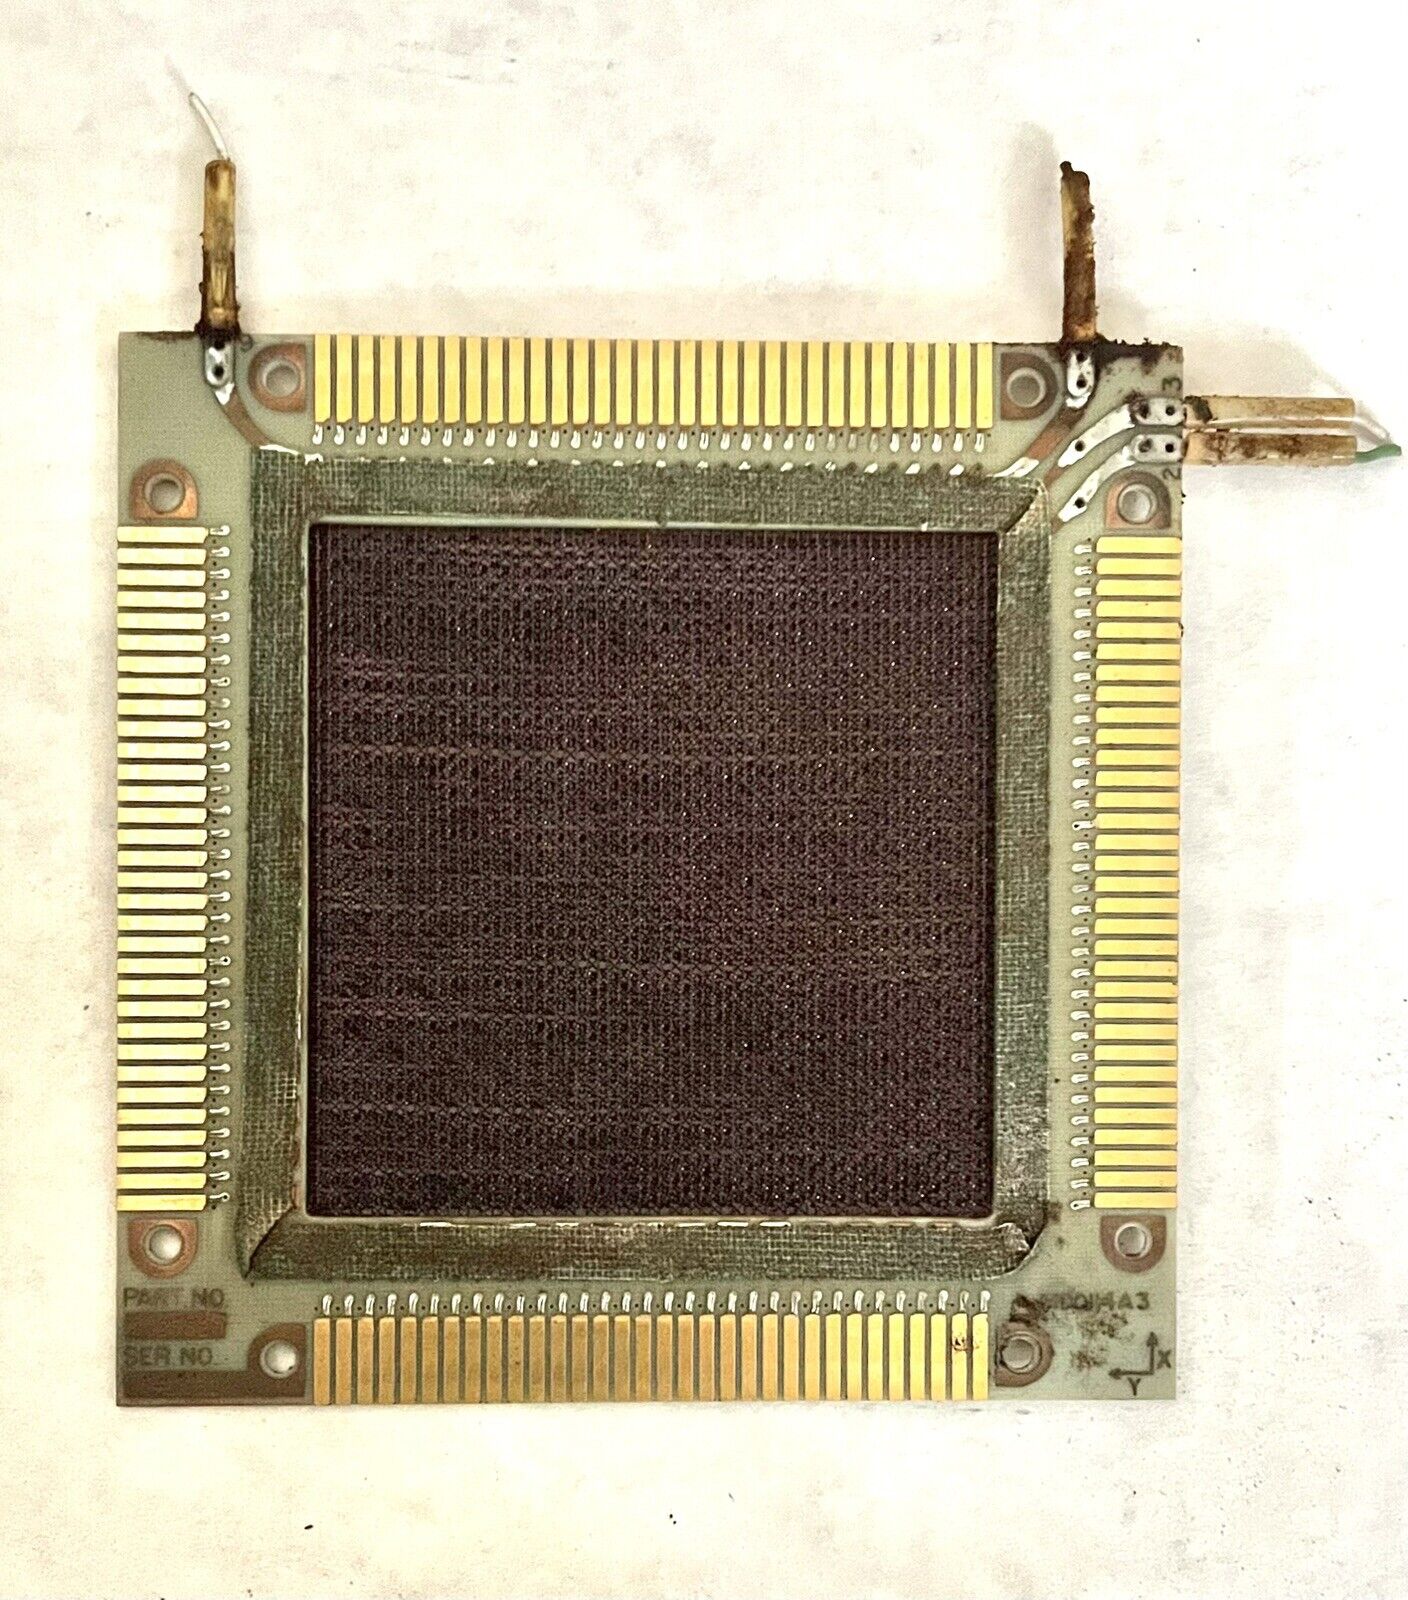 Vintage 1960s Univac C-111 Computer Core Memory Plane. Rare Early Computing